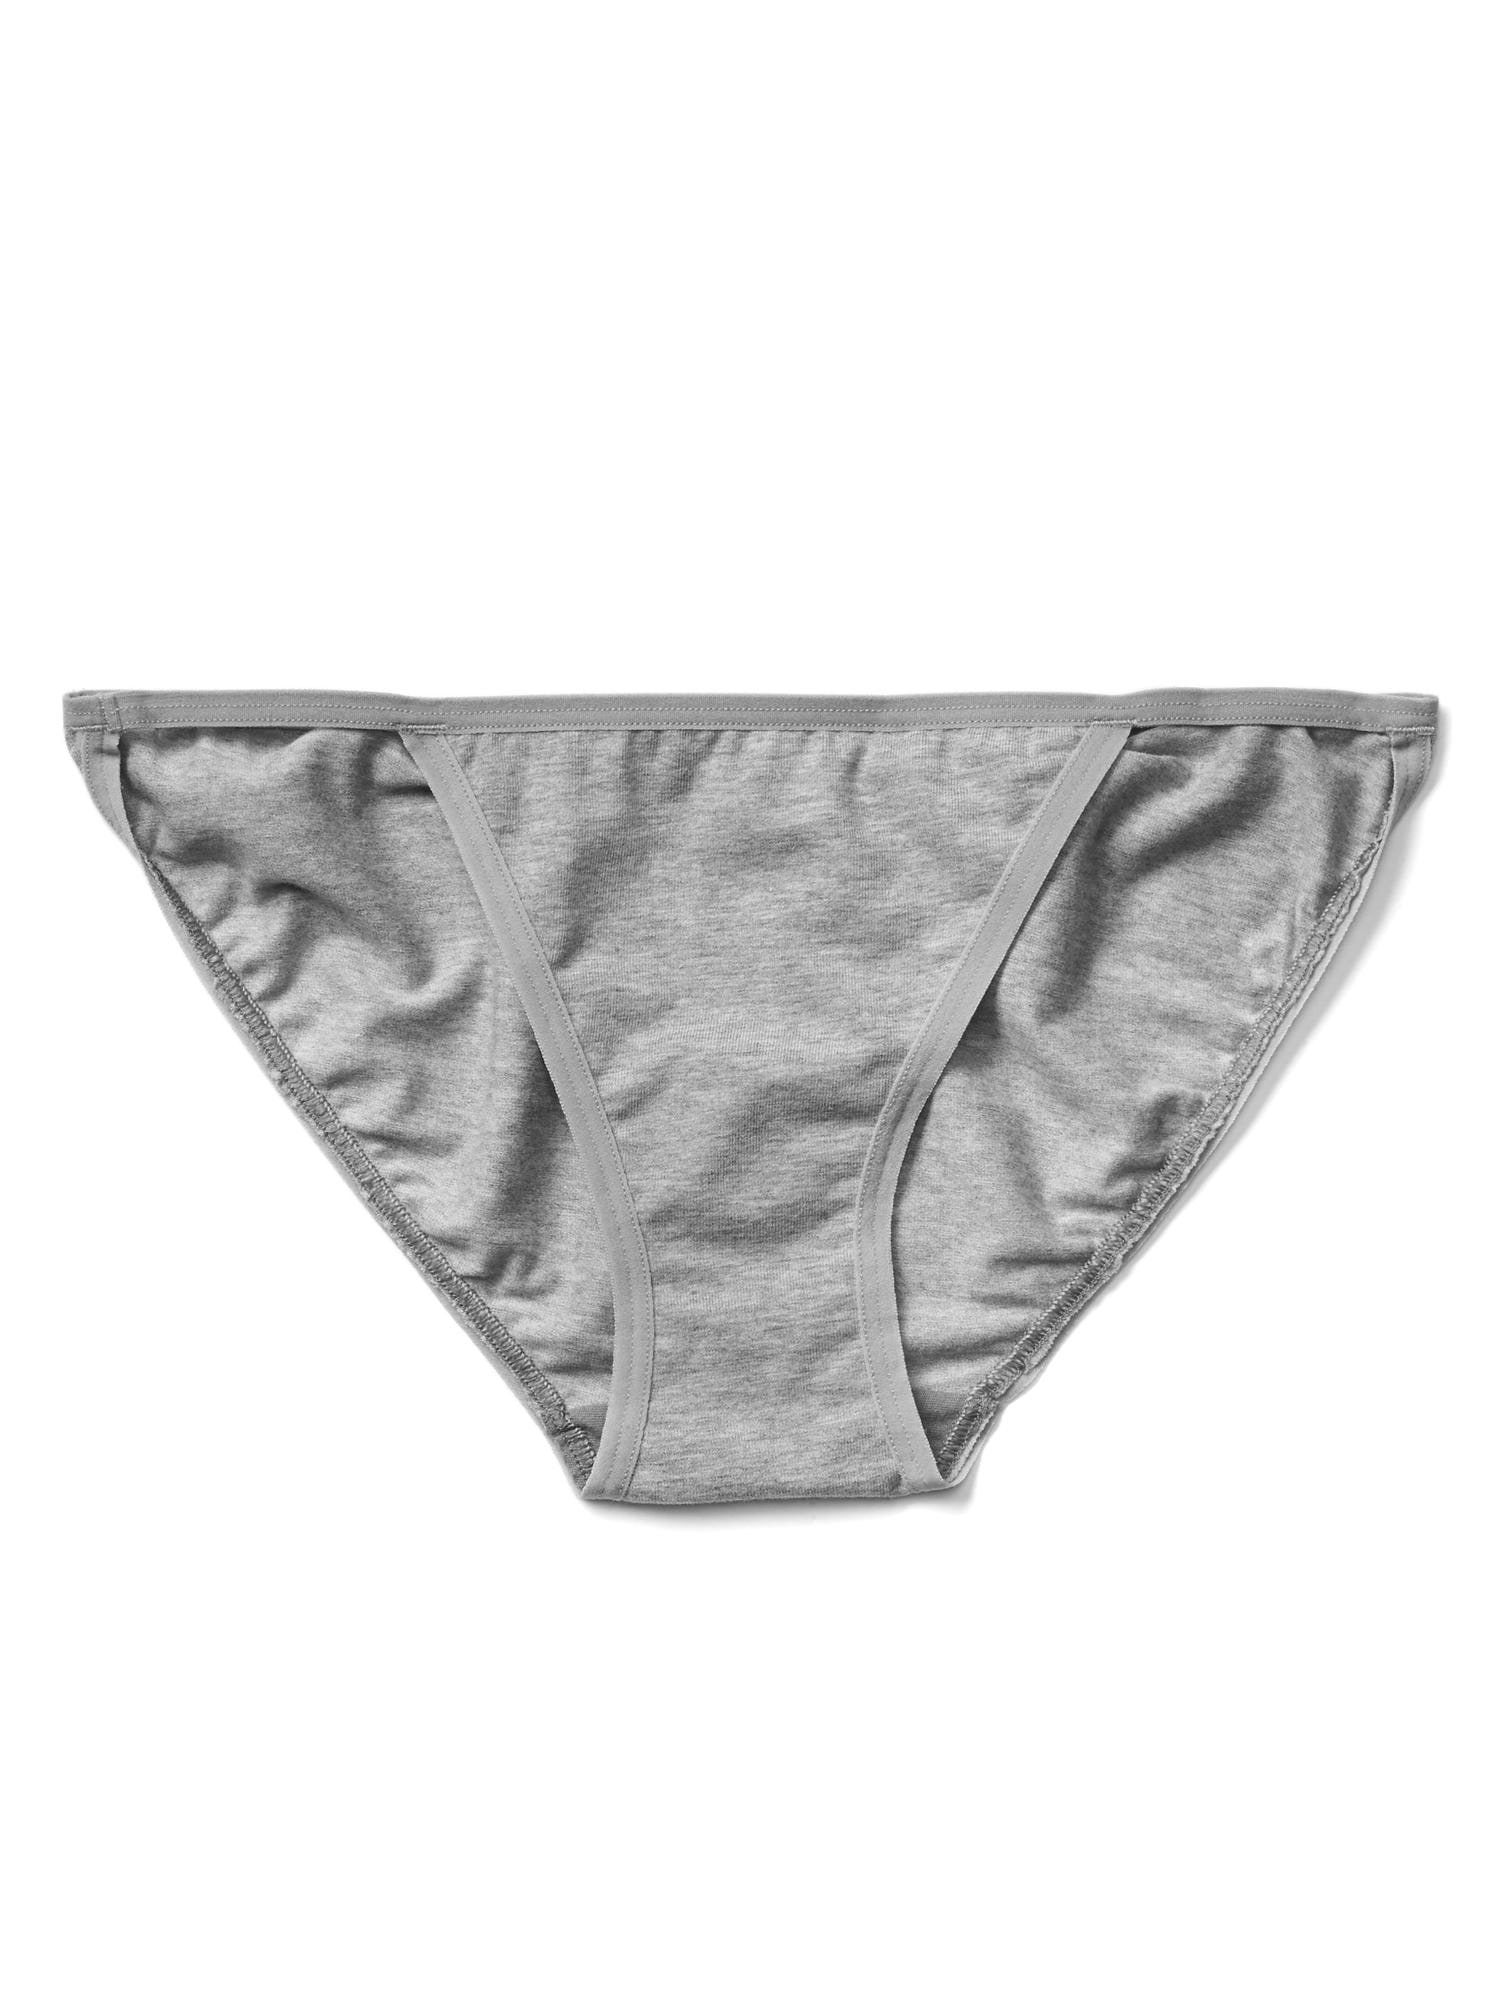 10 Pack Girls Underwear Bikinis 100% cotton SONOMA Panties Size 4